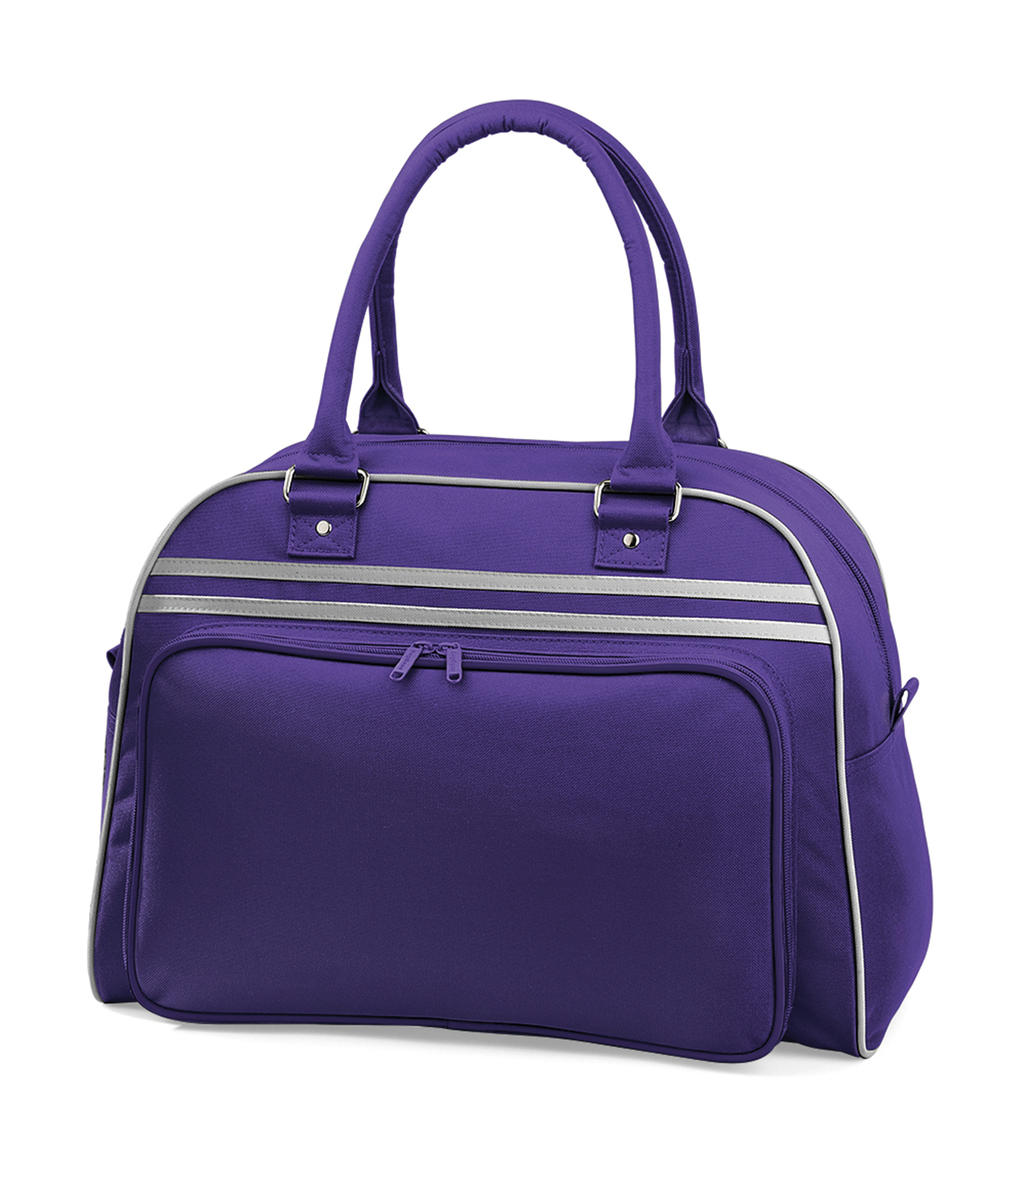  Retro Bowling Bag in Farbe Purple/Light Grey